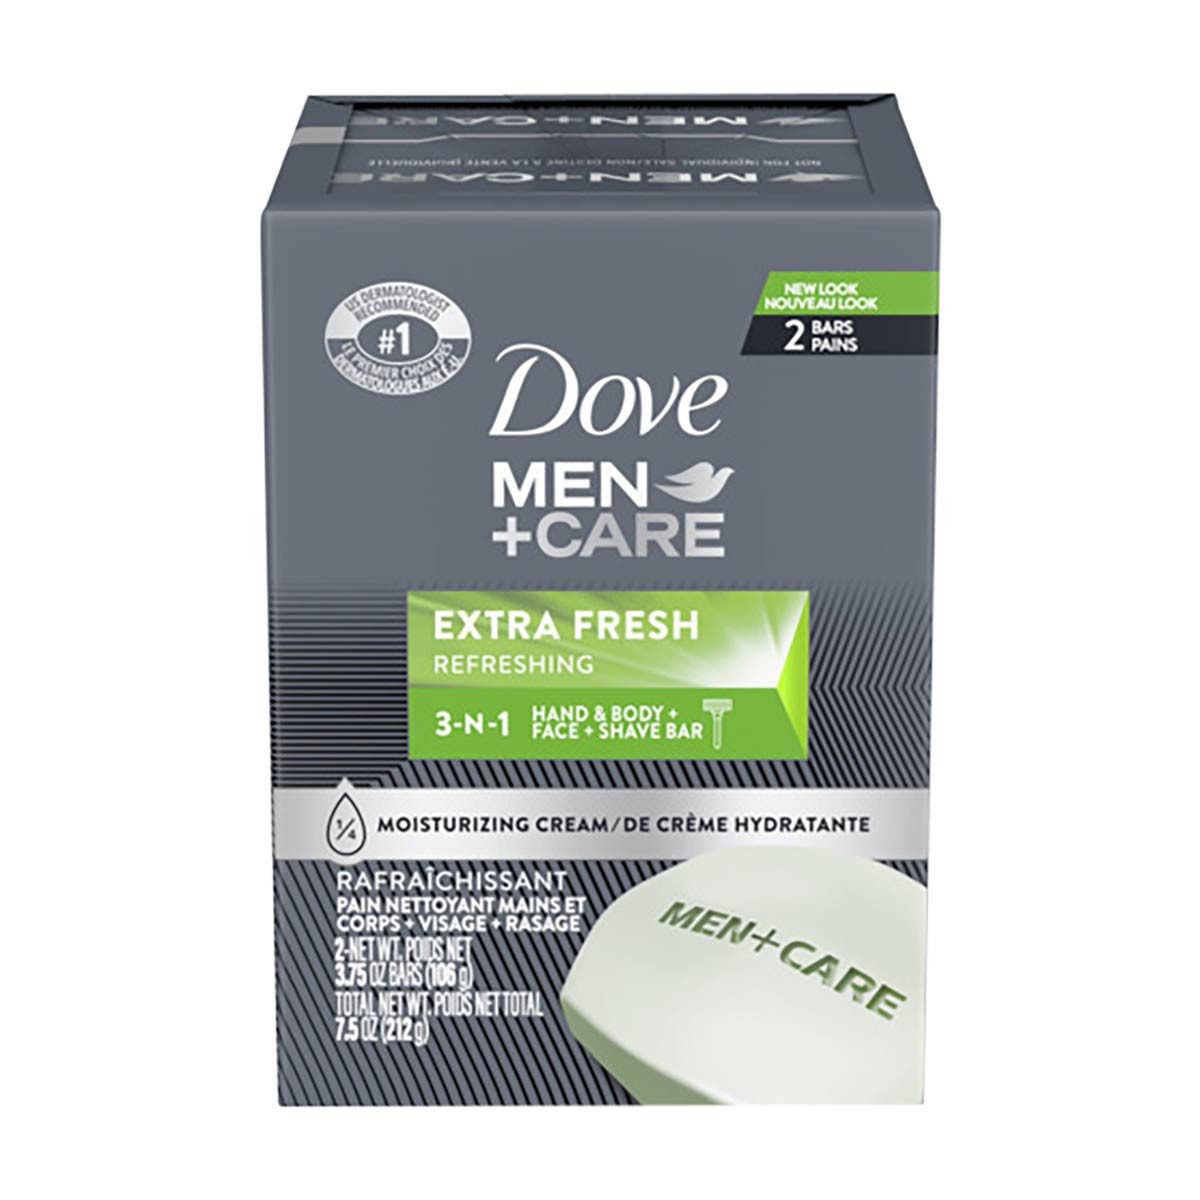 Dove Men +Care Extra Fresh 3-in-1 Bar Soap, 3.75 oz, 2 ct